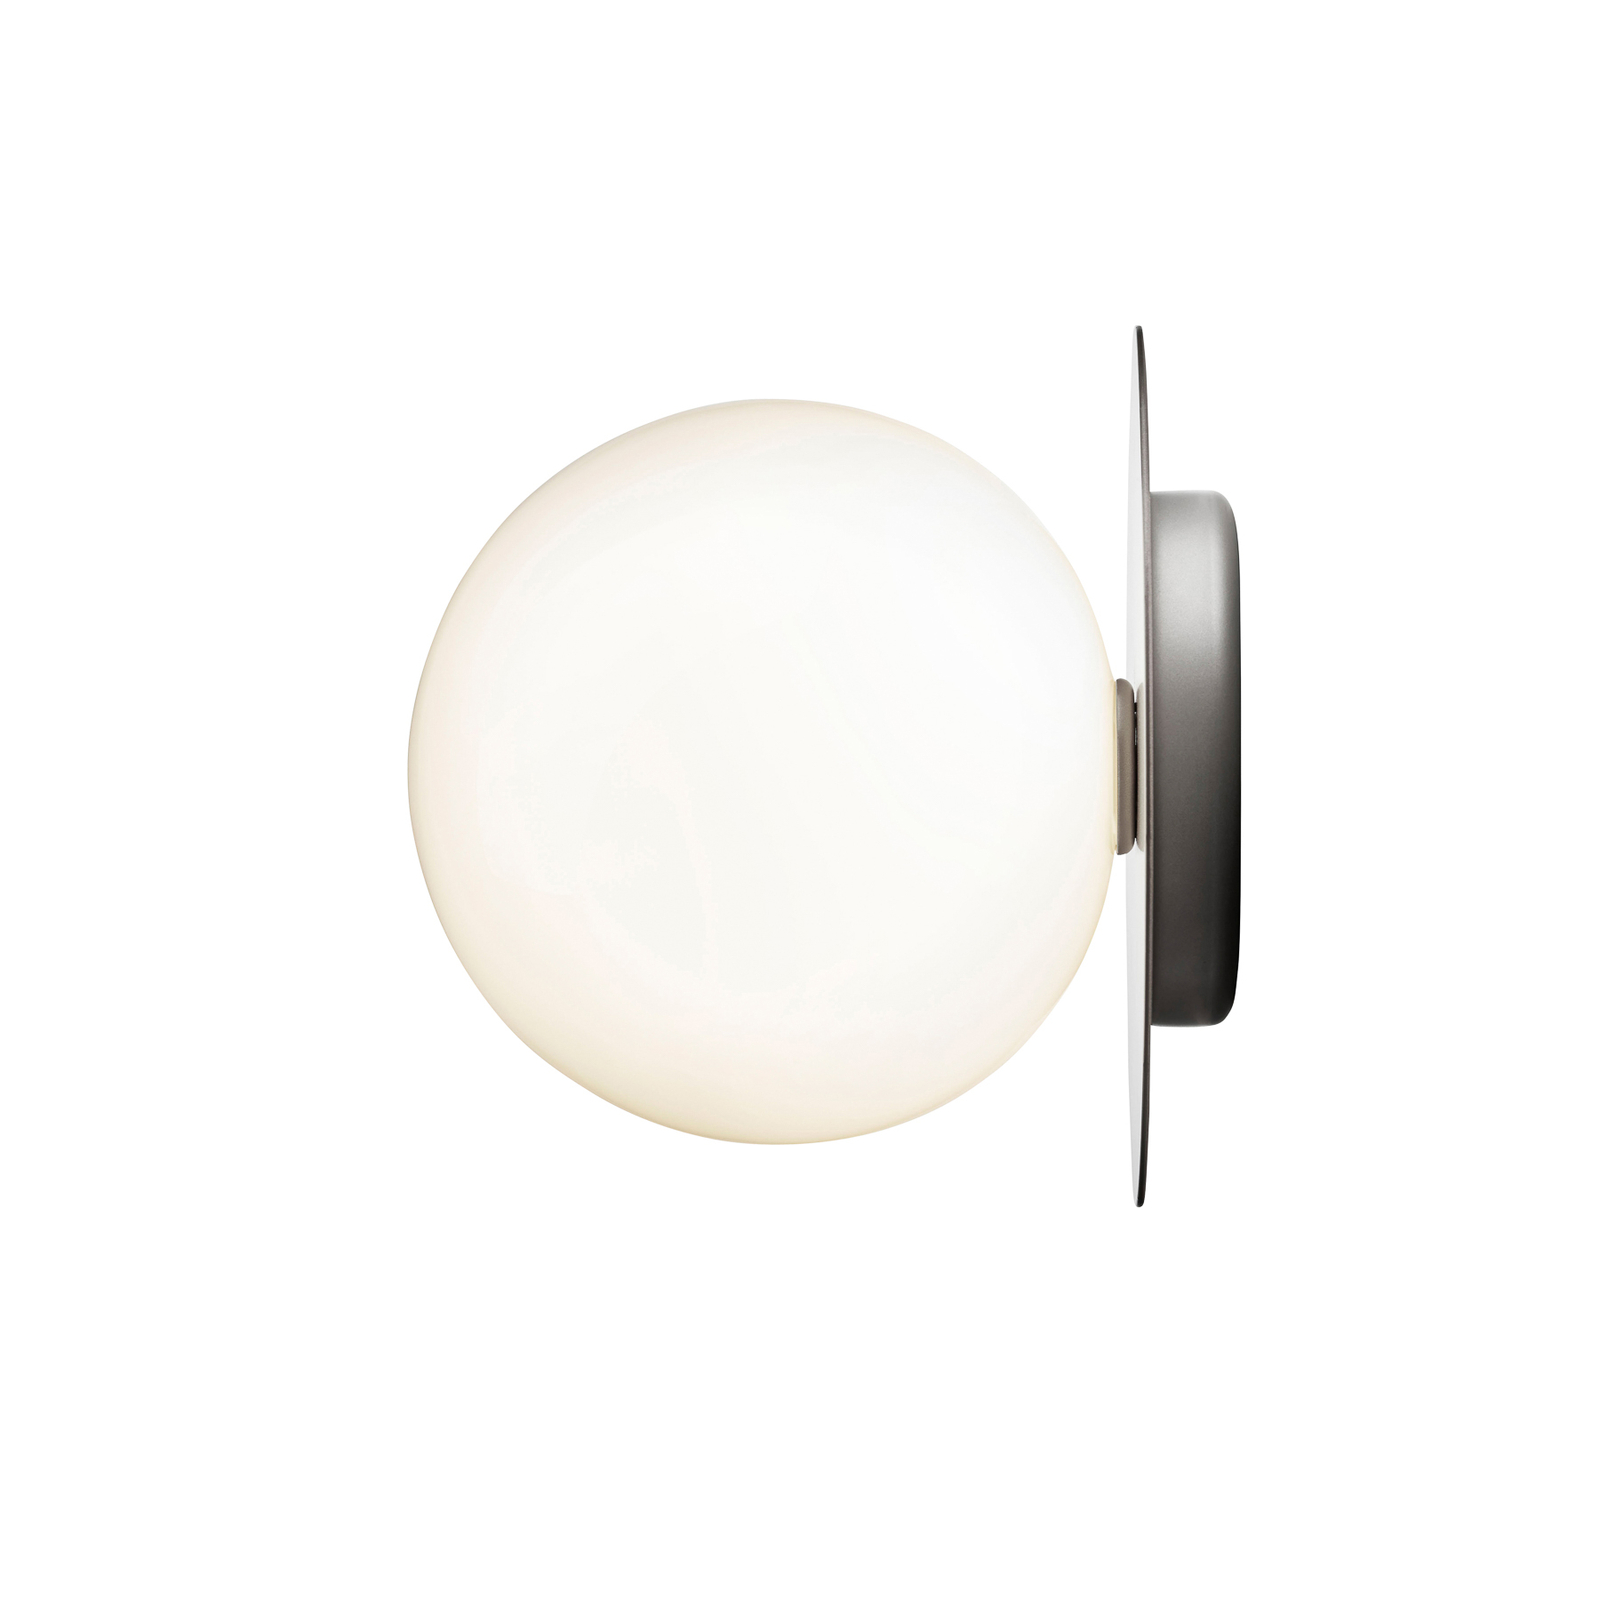 Nuura Liila 1 Large wall light 1-bulb silver/white